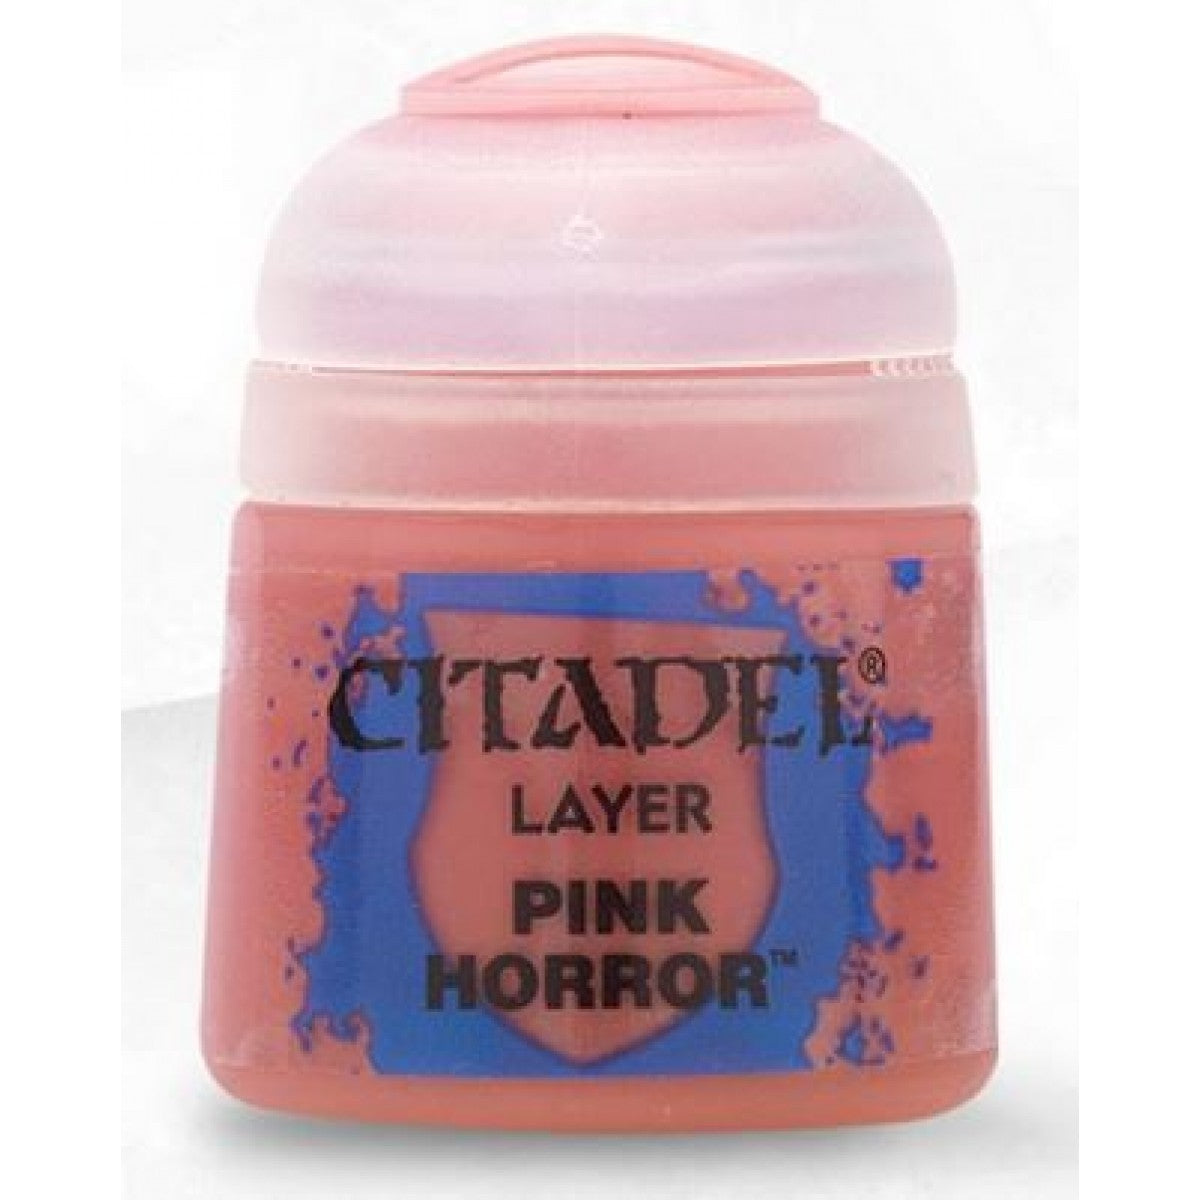 Citadel Layer Paint - Pink Horror 12ml (22-69)